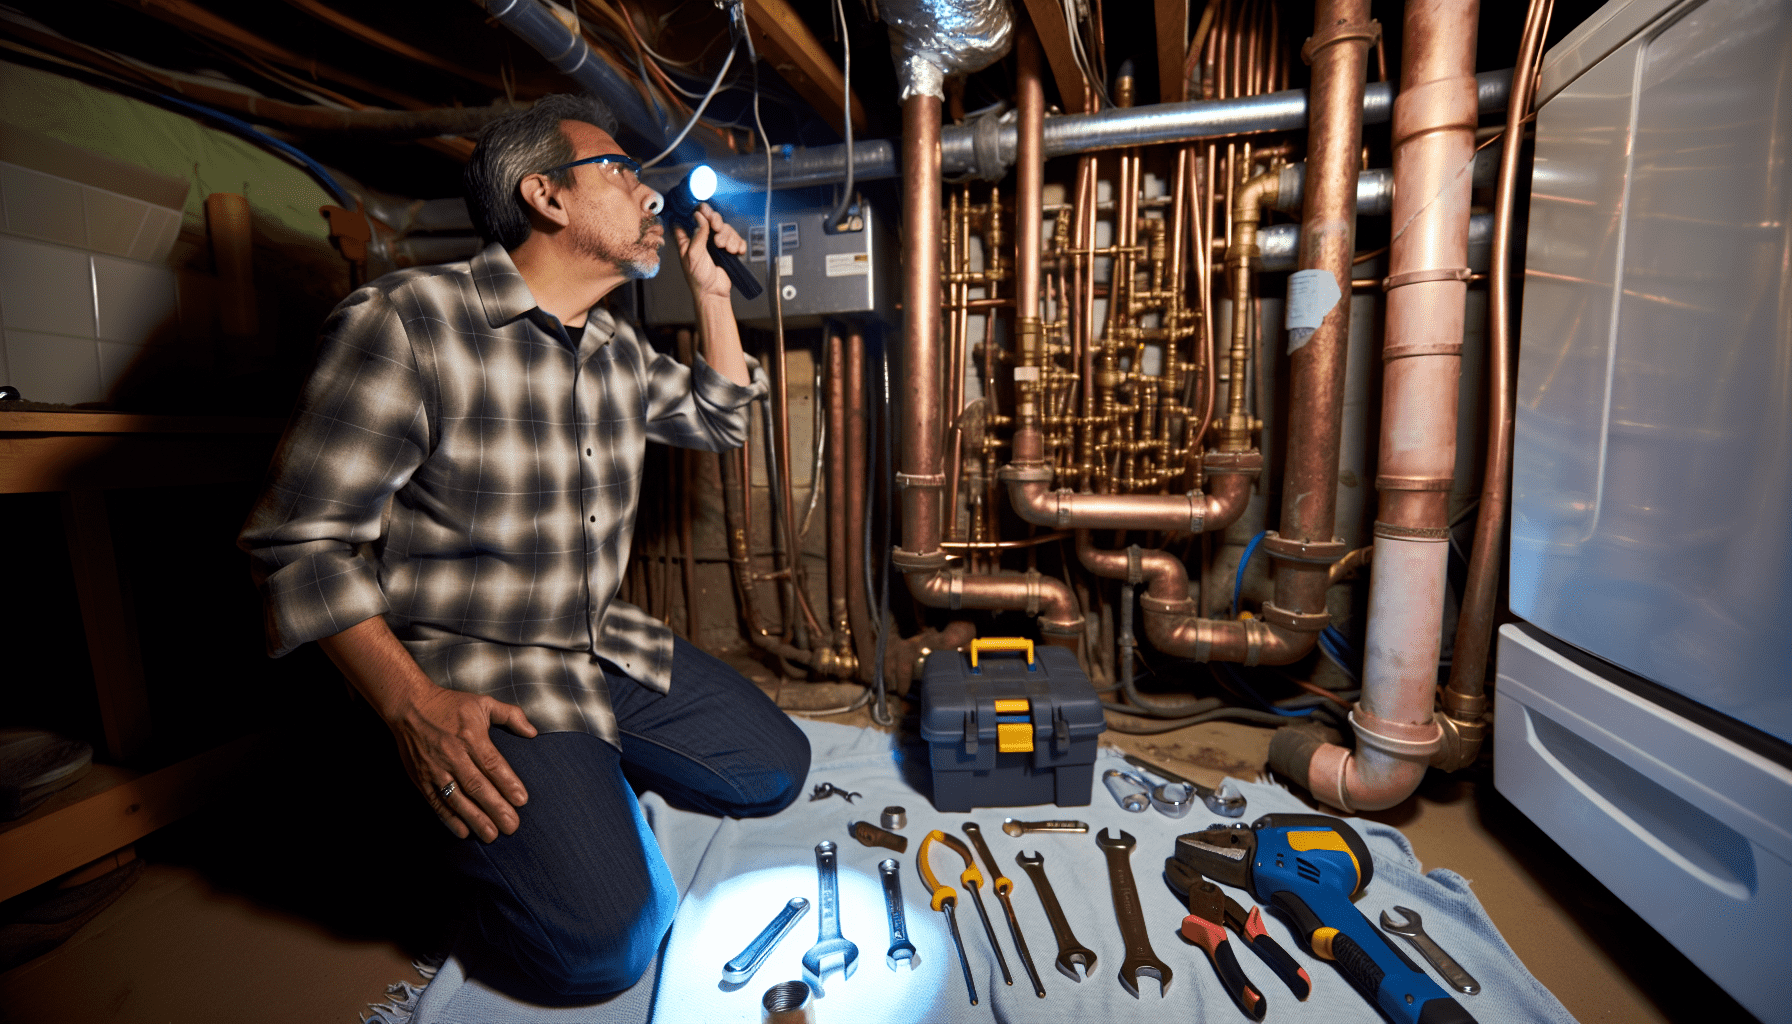 Visual plumbing inspection process